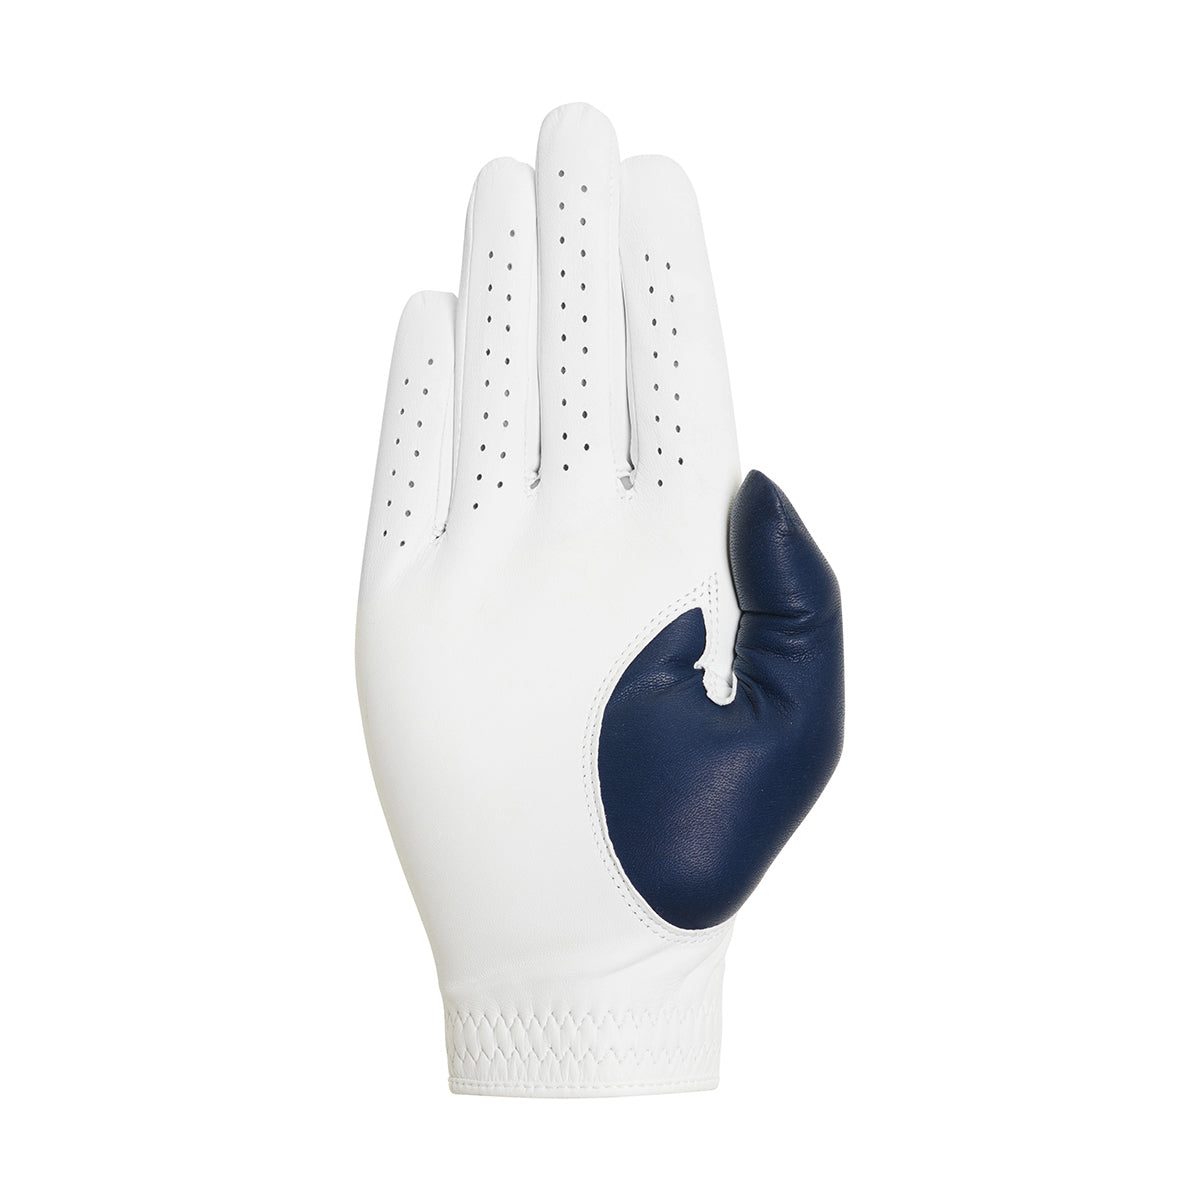 Men's Elite Pro Sentosa White / Navy Golf Glove - Right